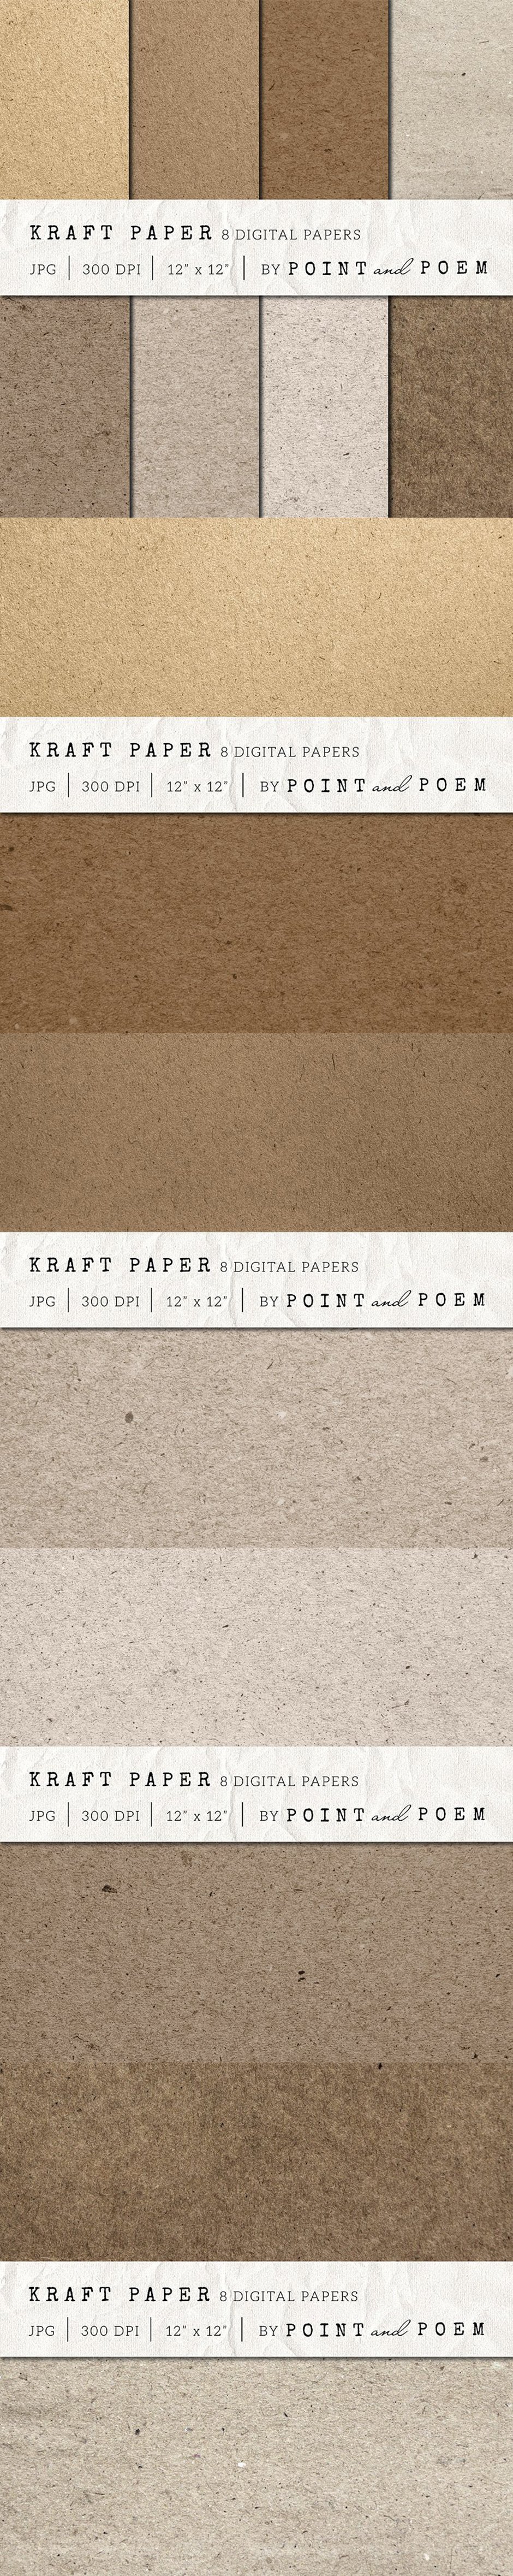 Kraft Paper Texture Pack